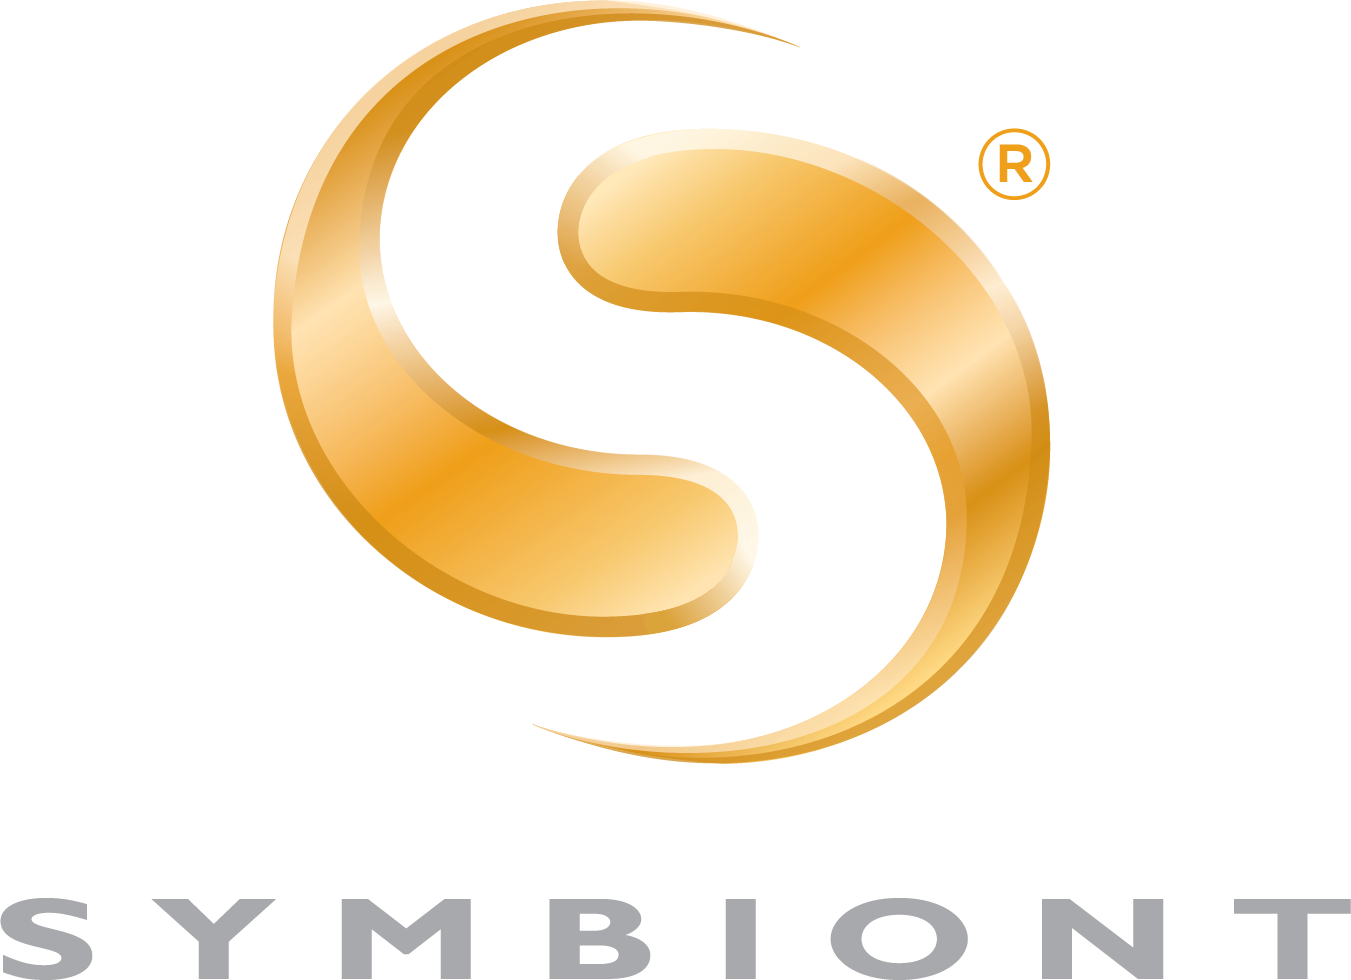 Symbiont Science, Engineering and Construction, Inc. (dba Symbiont) Company Logo